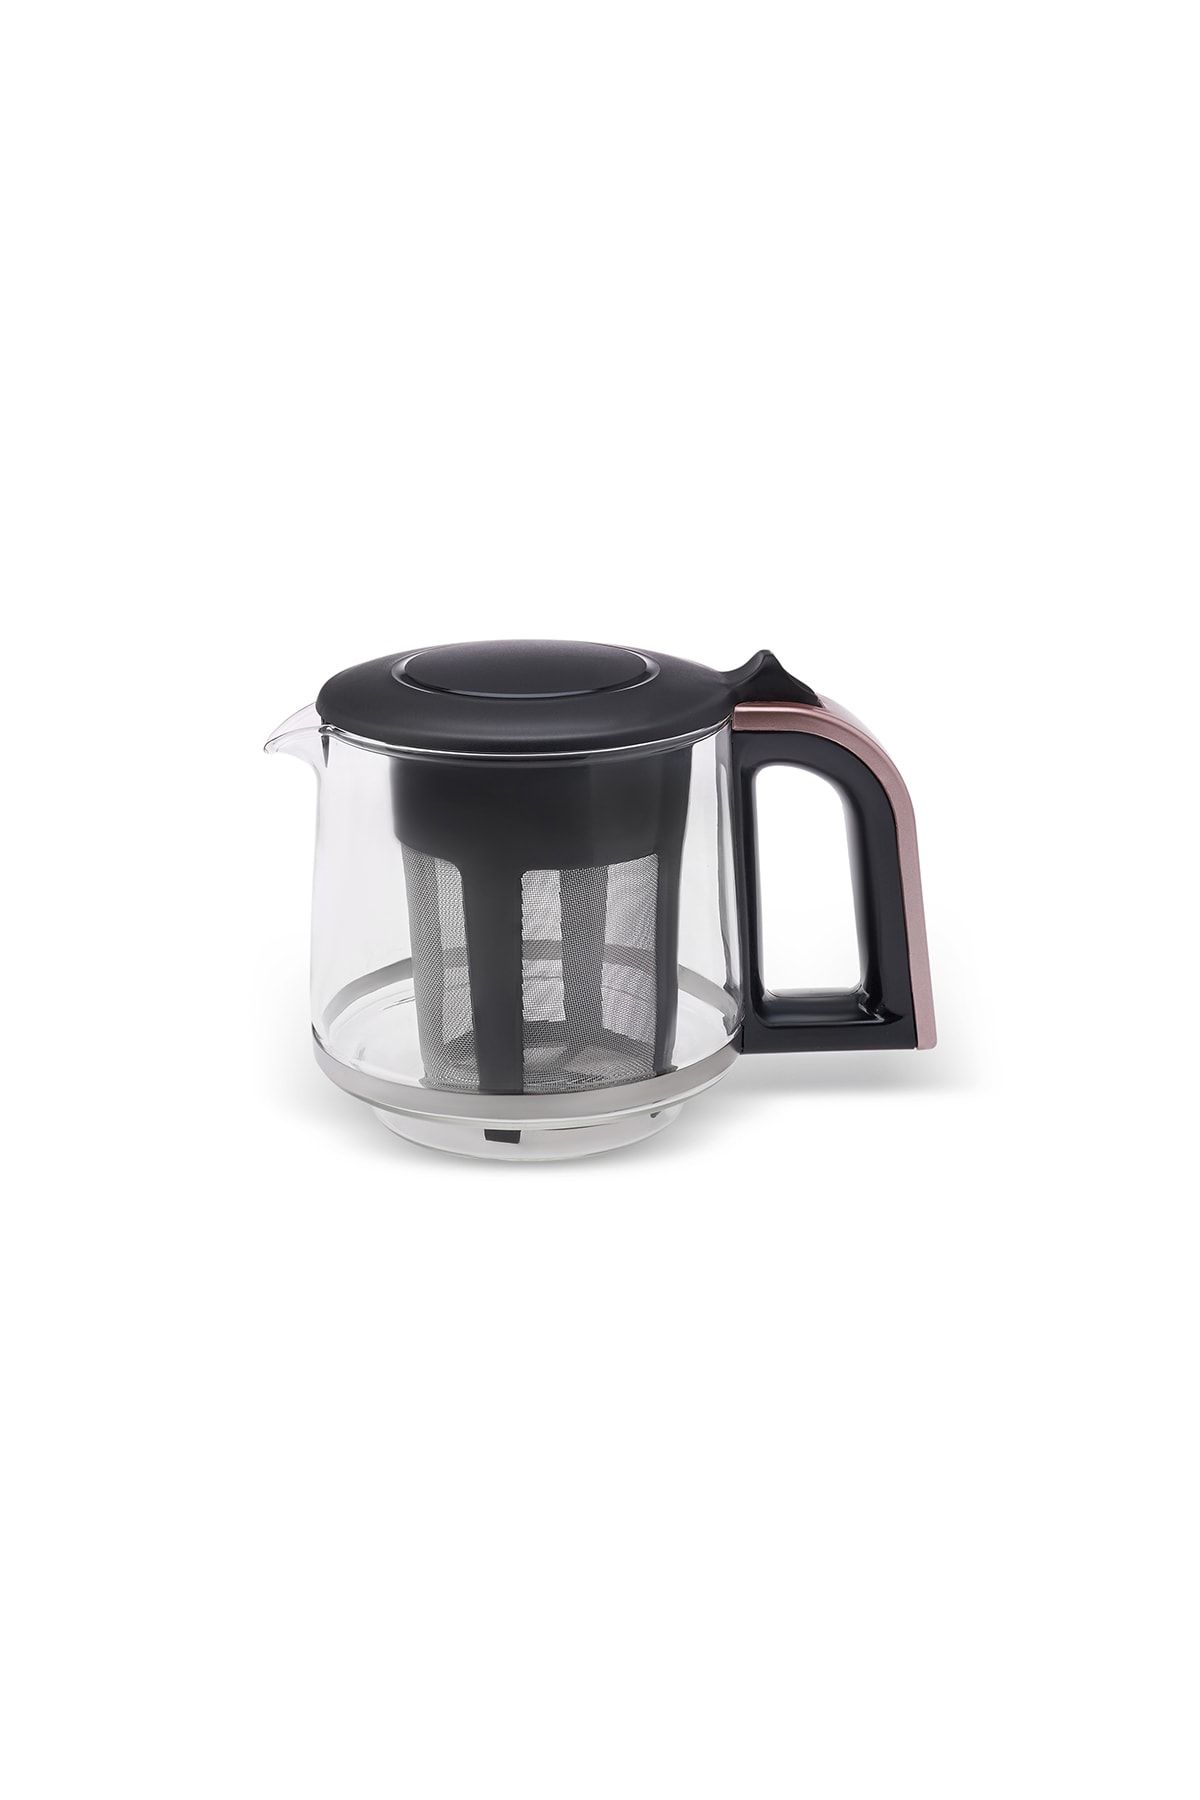 Karaca Caysever Robotea 3 in 1 Talking Tea Maker Kettle and Filter Coffee  Brewing Machine Rosegold - KARACA EUROPE